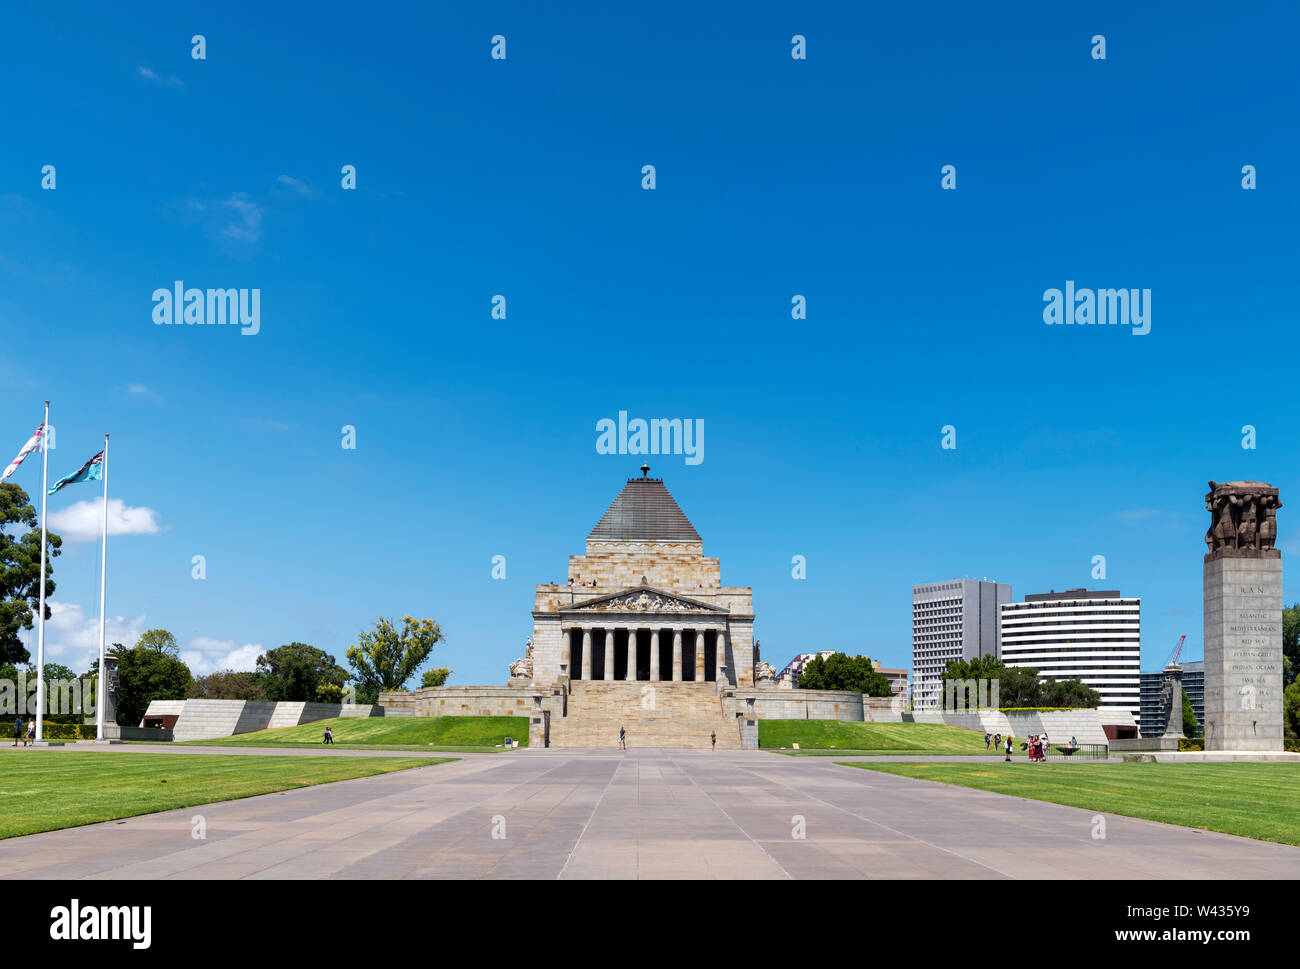 The Shrine of Remembrance, a war memorial in Kings Domain, Melbourne, Victoria, Australia Stock Photo